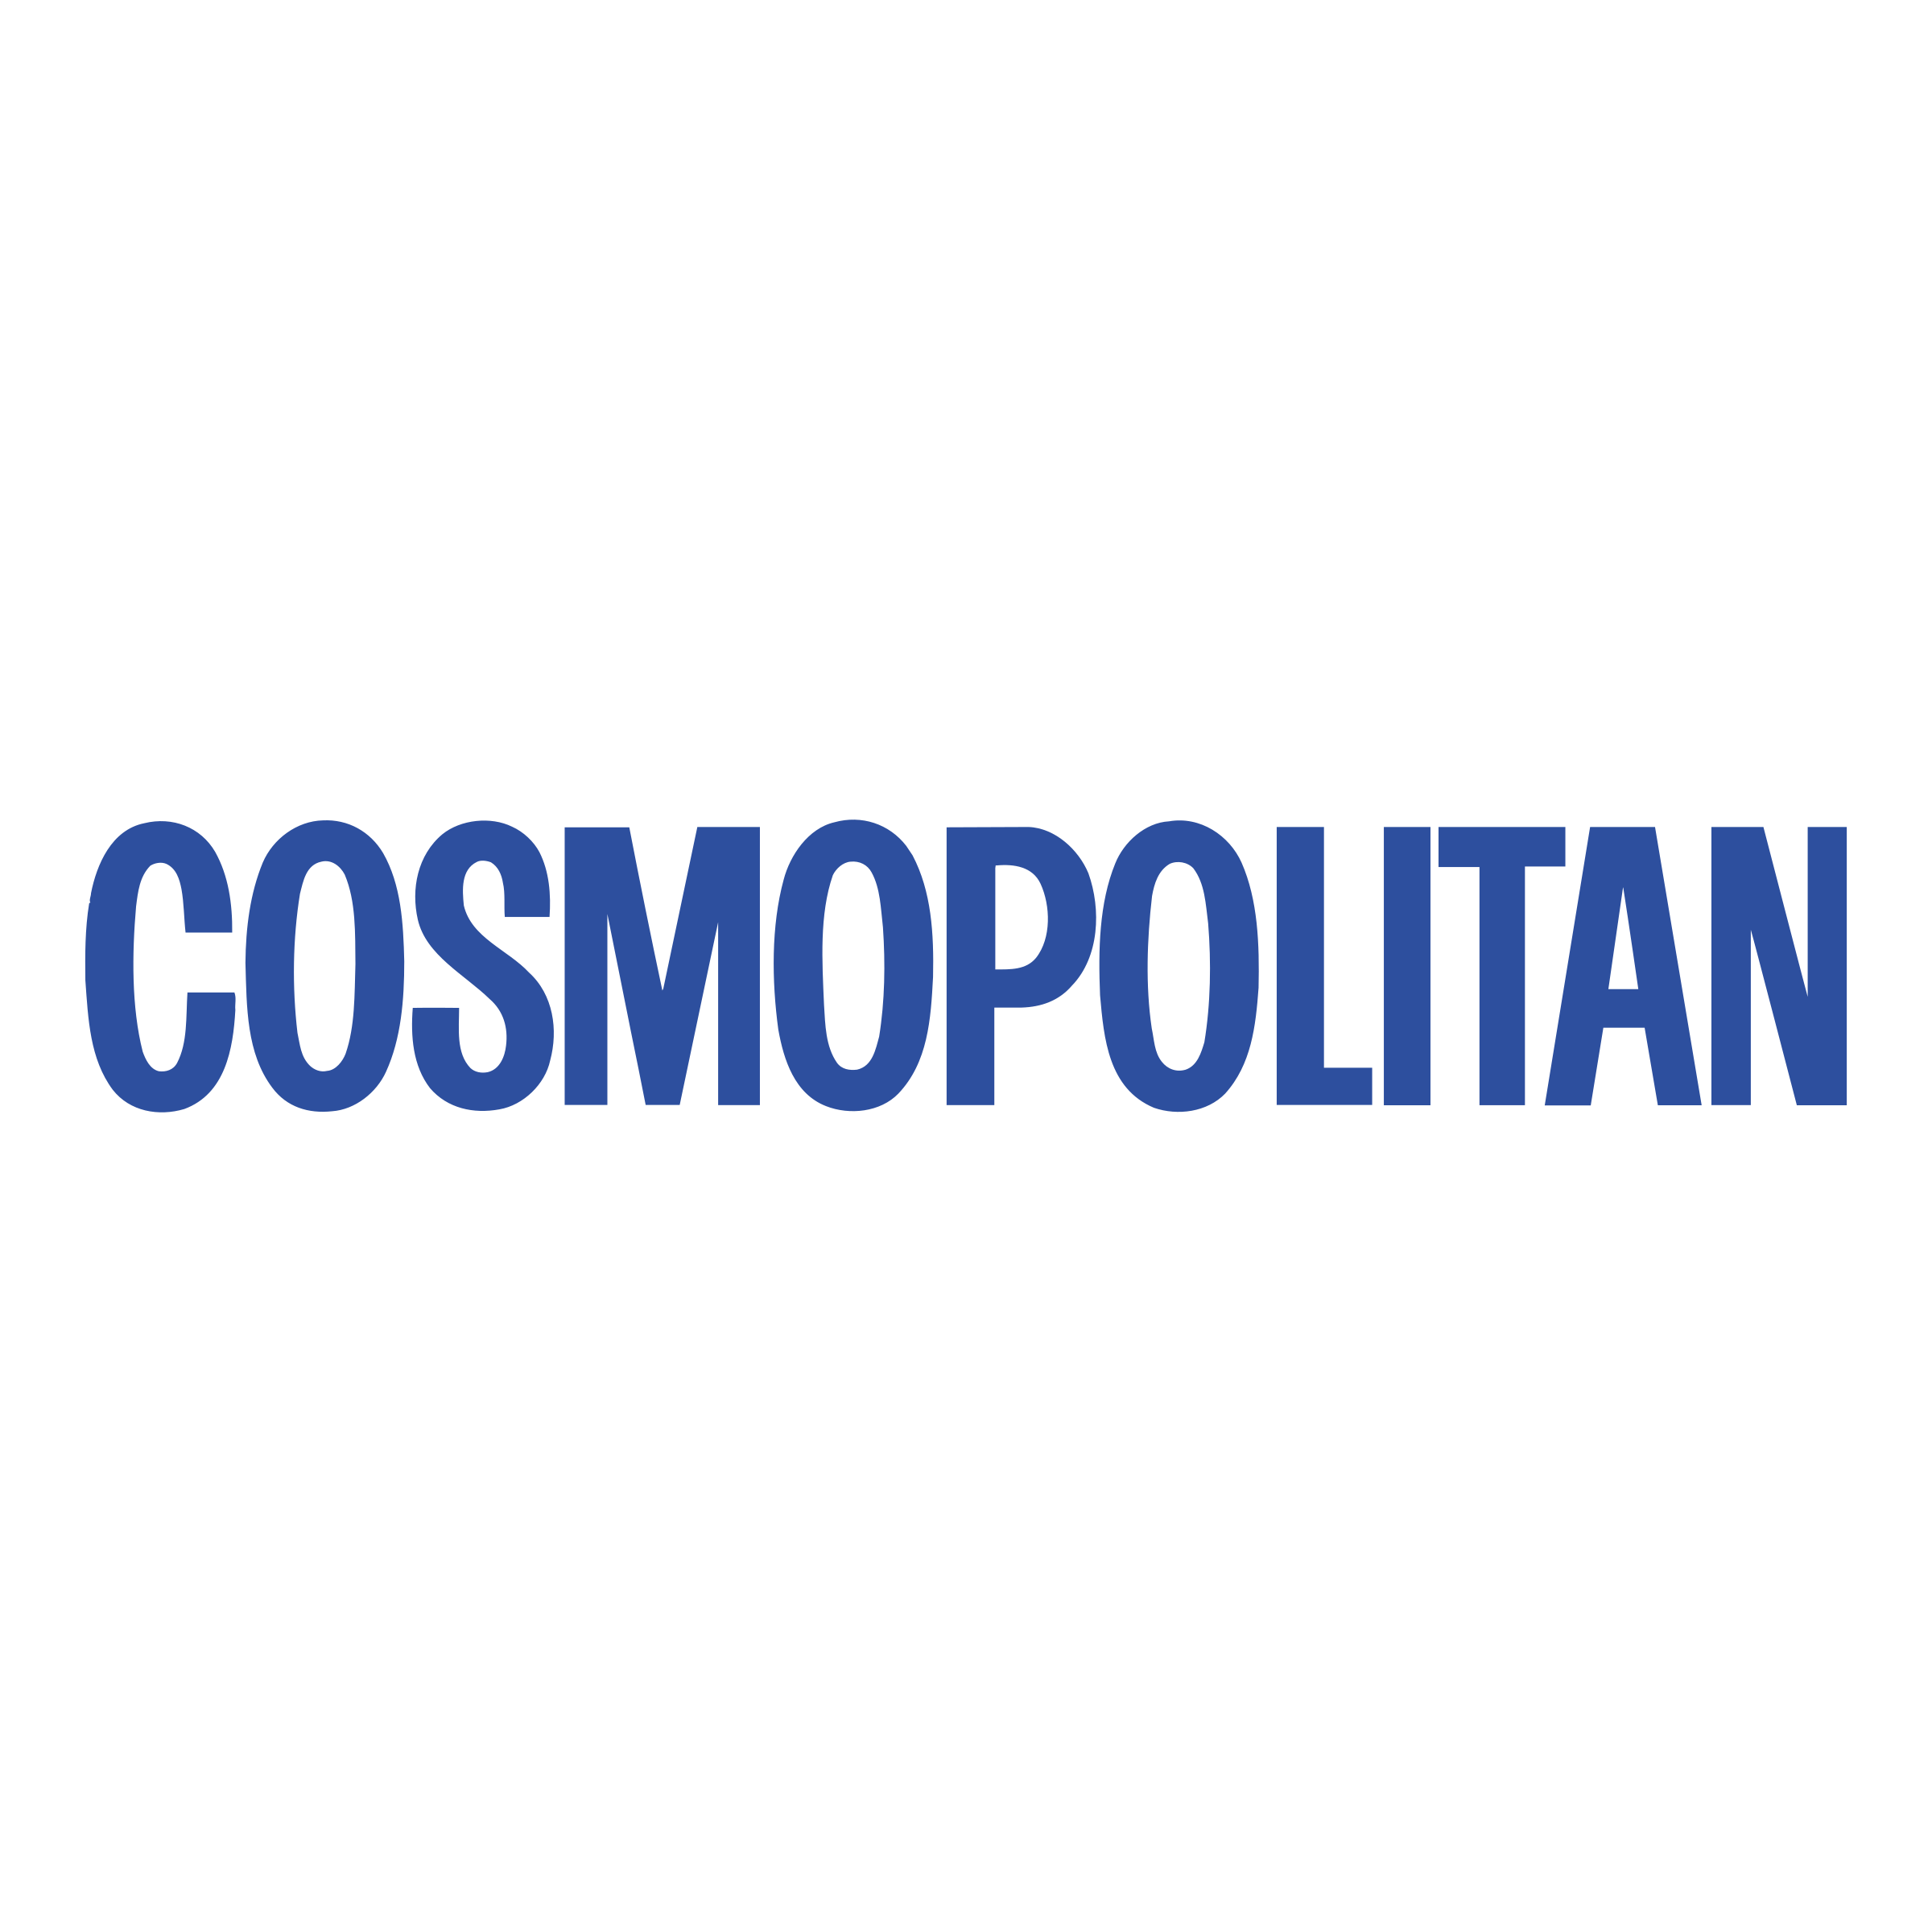 Cosmopolitan Logo - Cosmopolitan Logo PNG Transparent & SVG Vector